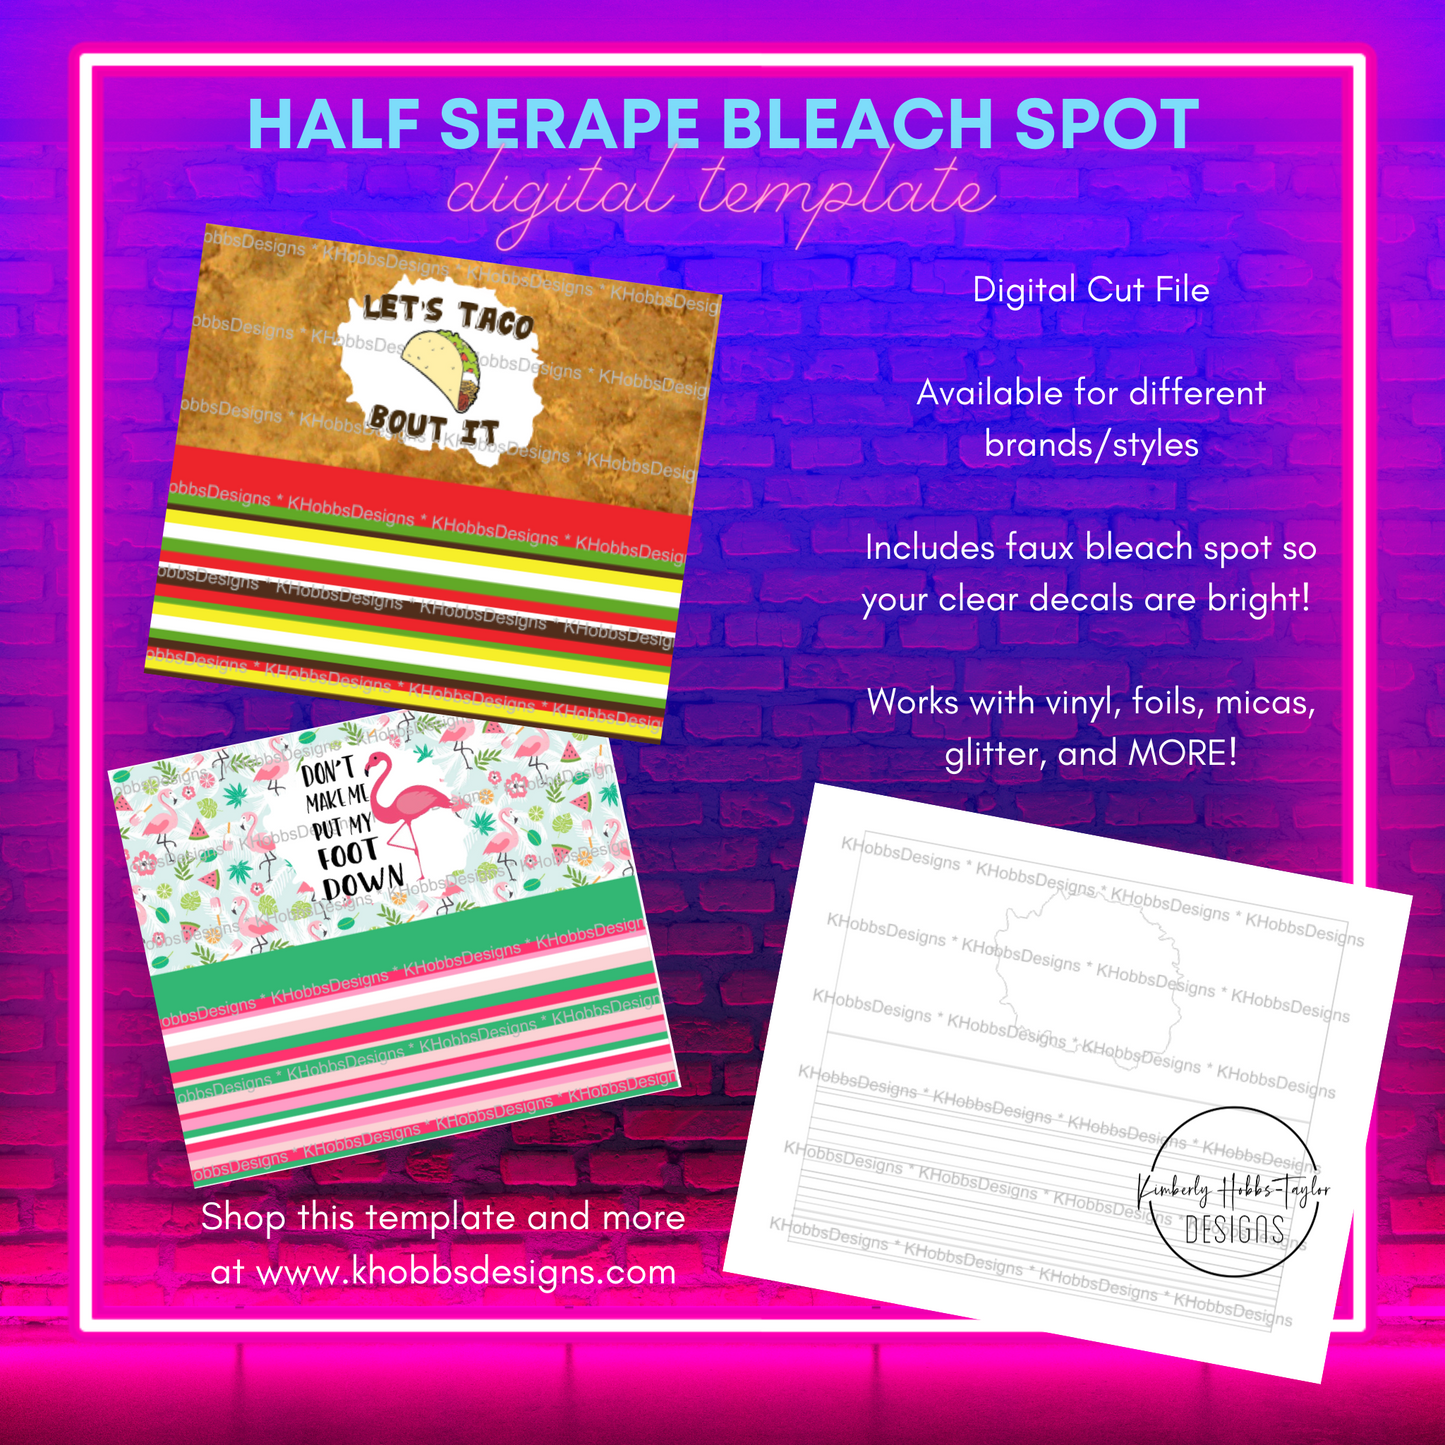 Half Serape Bleach Spot Template for Makerflo 20 Skinny - Digital Cut File Only